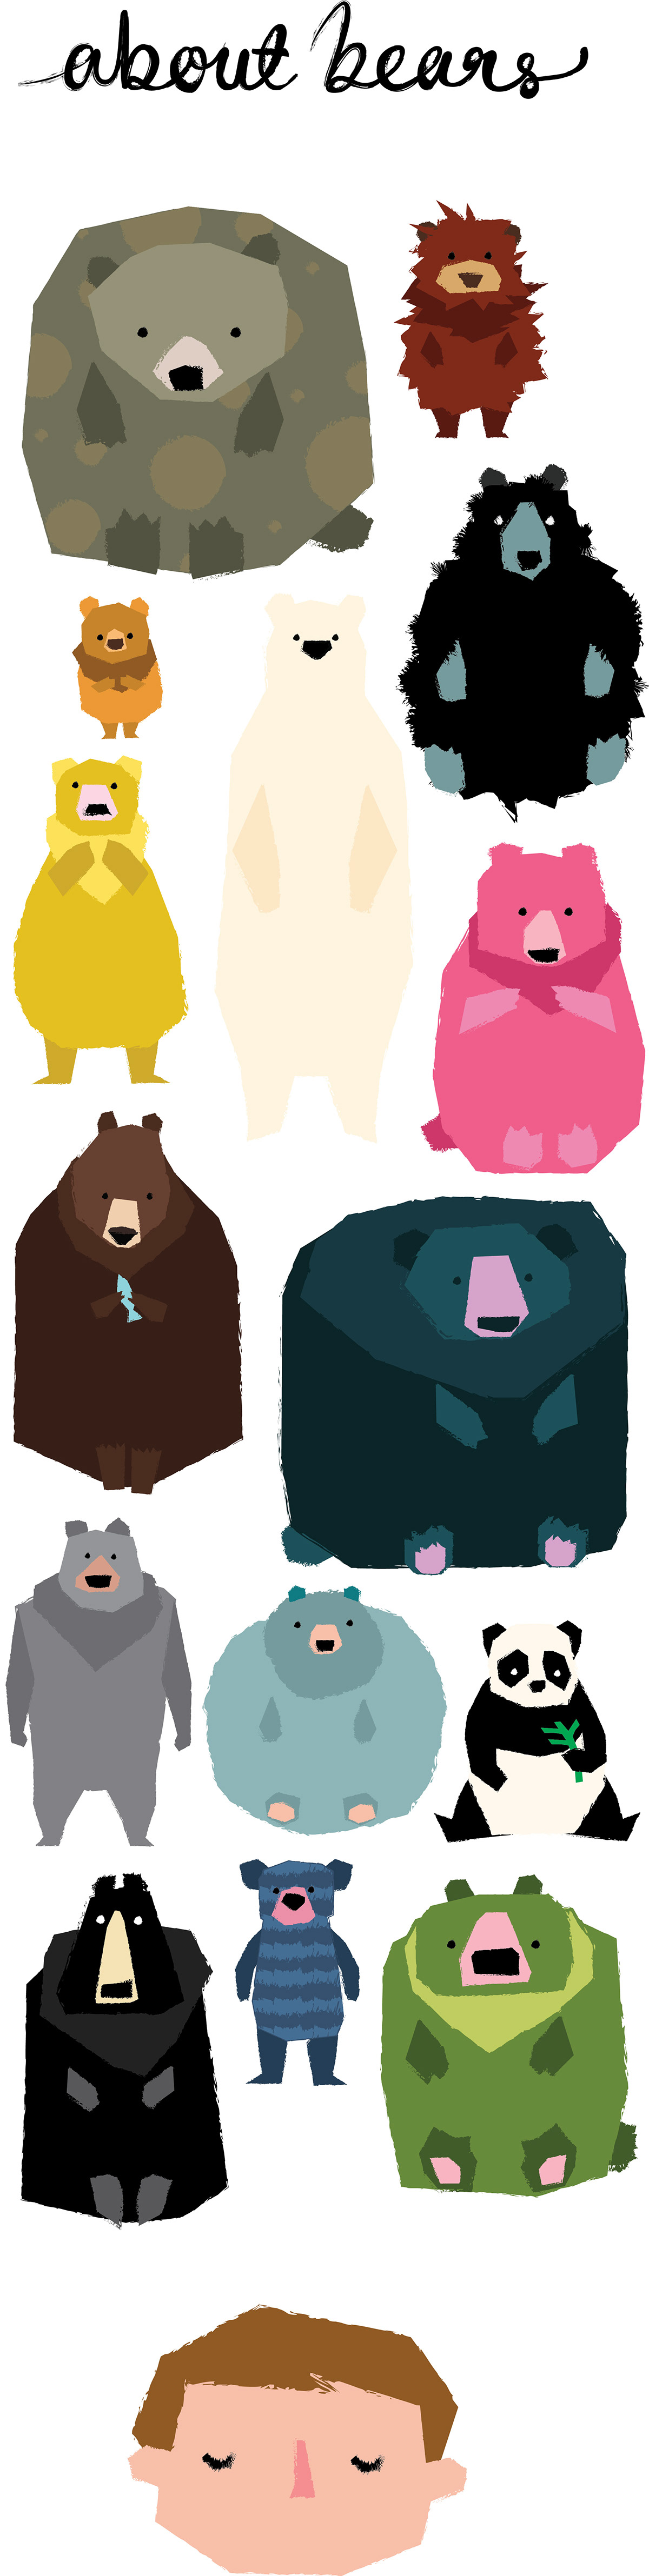 childrens bookc childrens illustration bear illustration bears storybook poem book